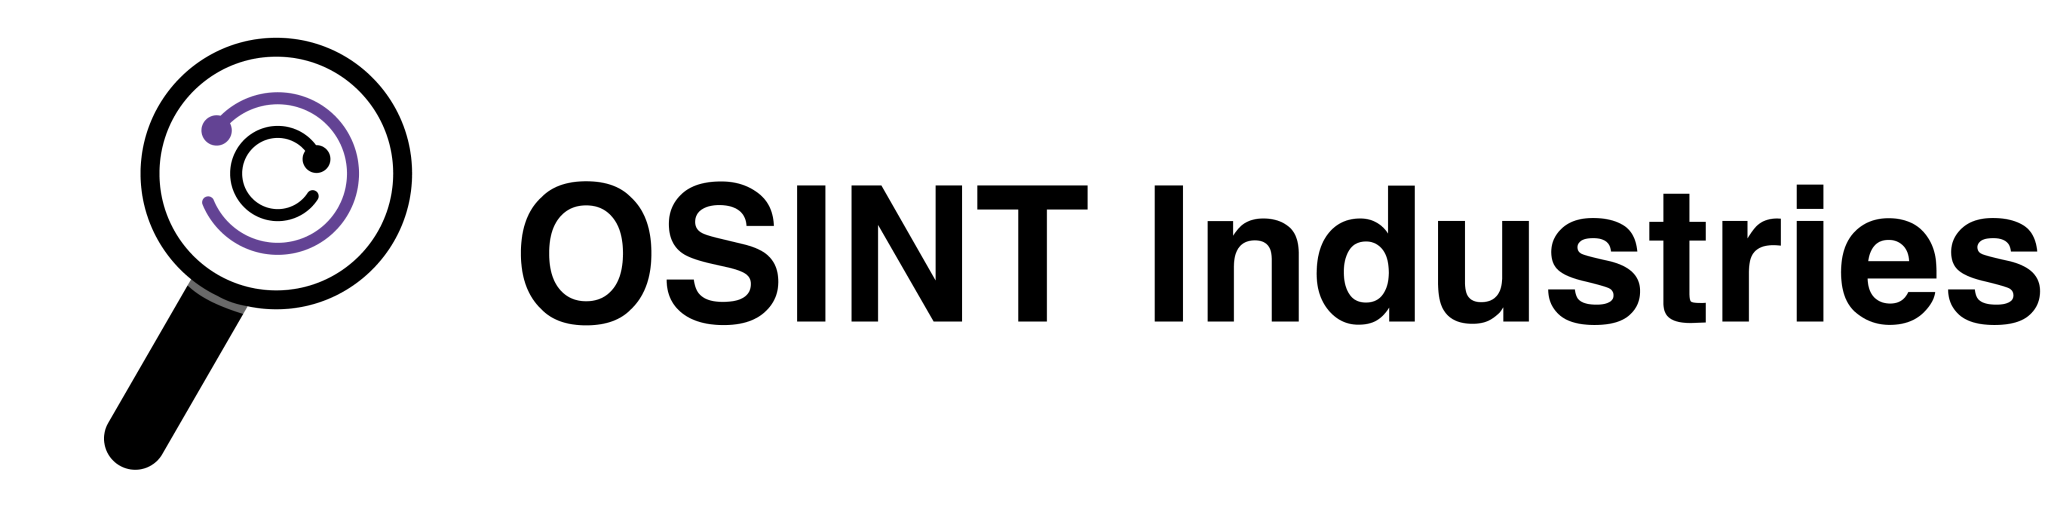 OSINT logo